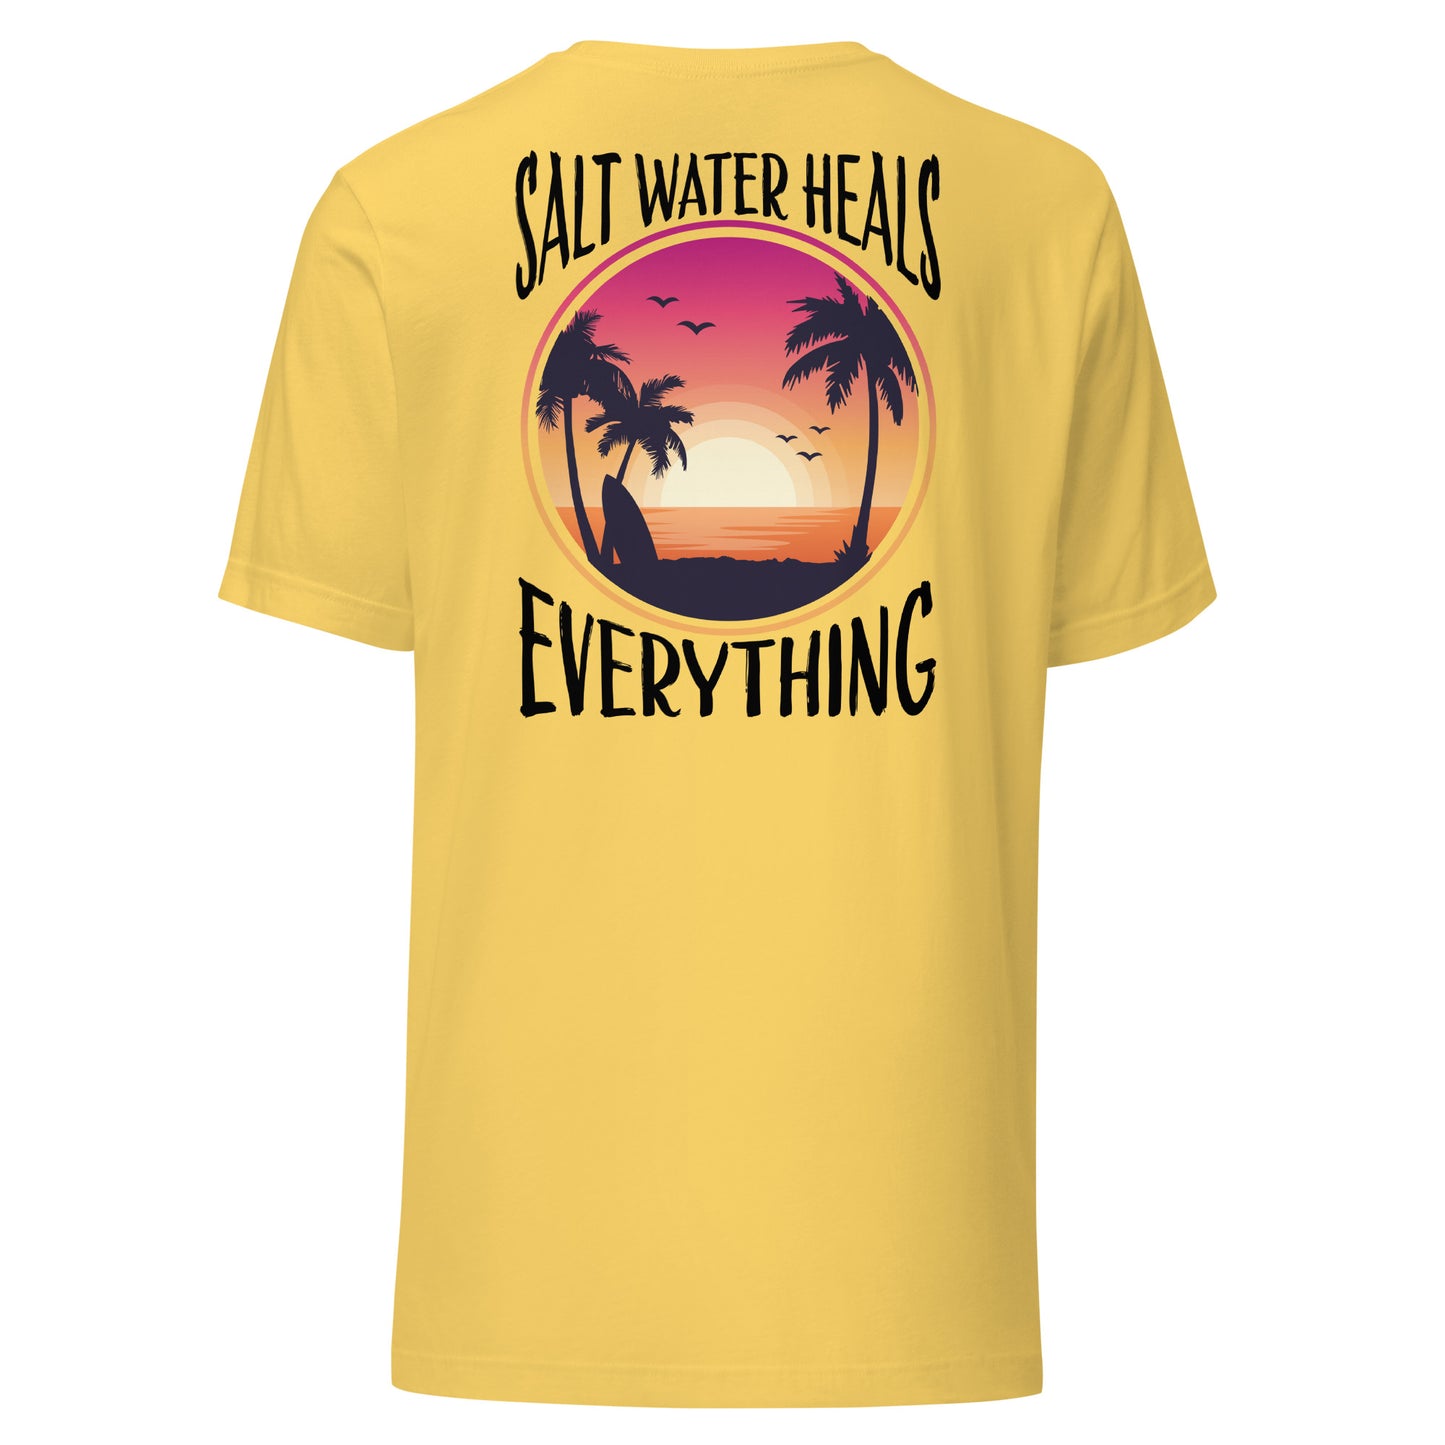 Saltwater Beats Everything T-Shirt